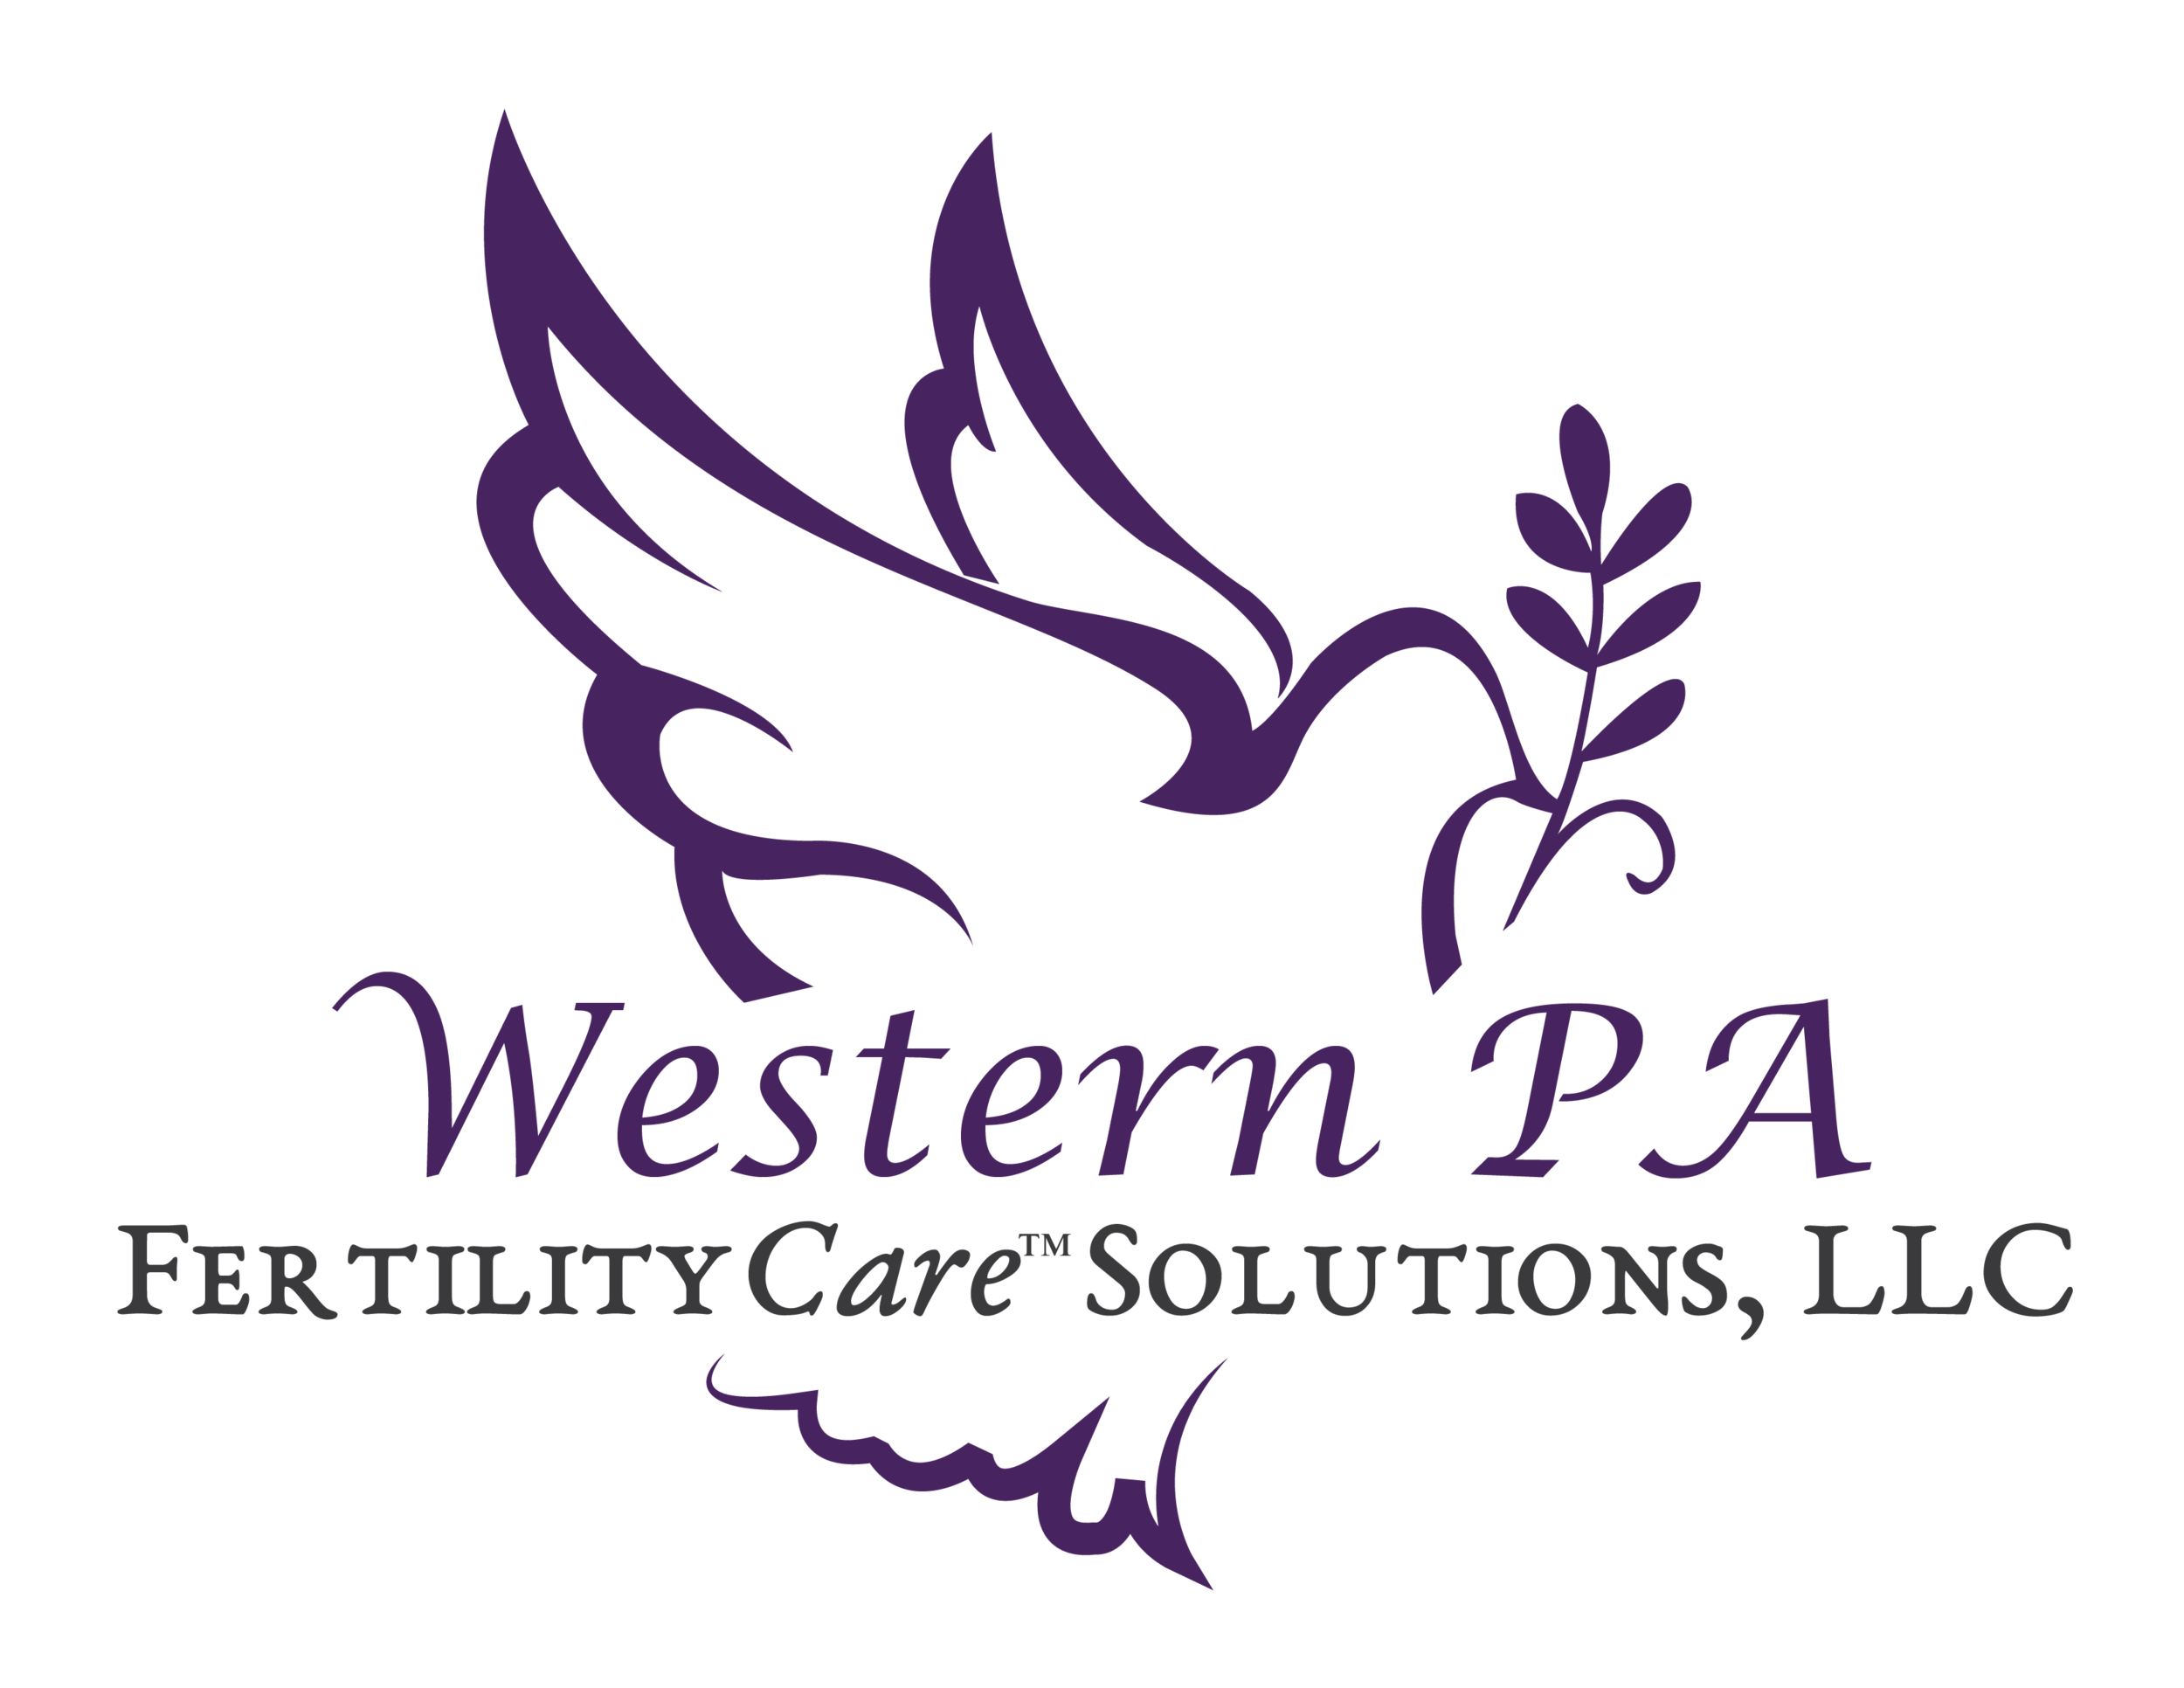 Western PA FertilityCare Solutions